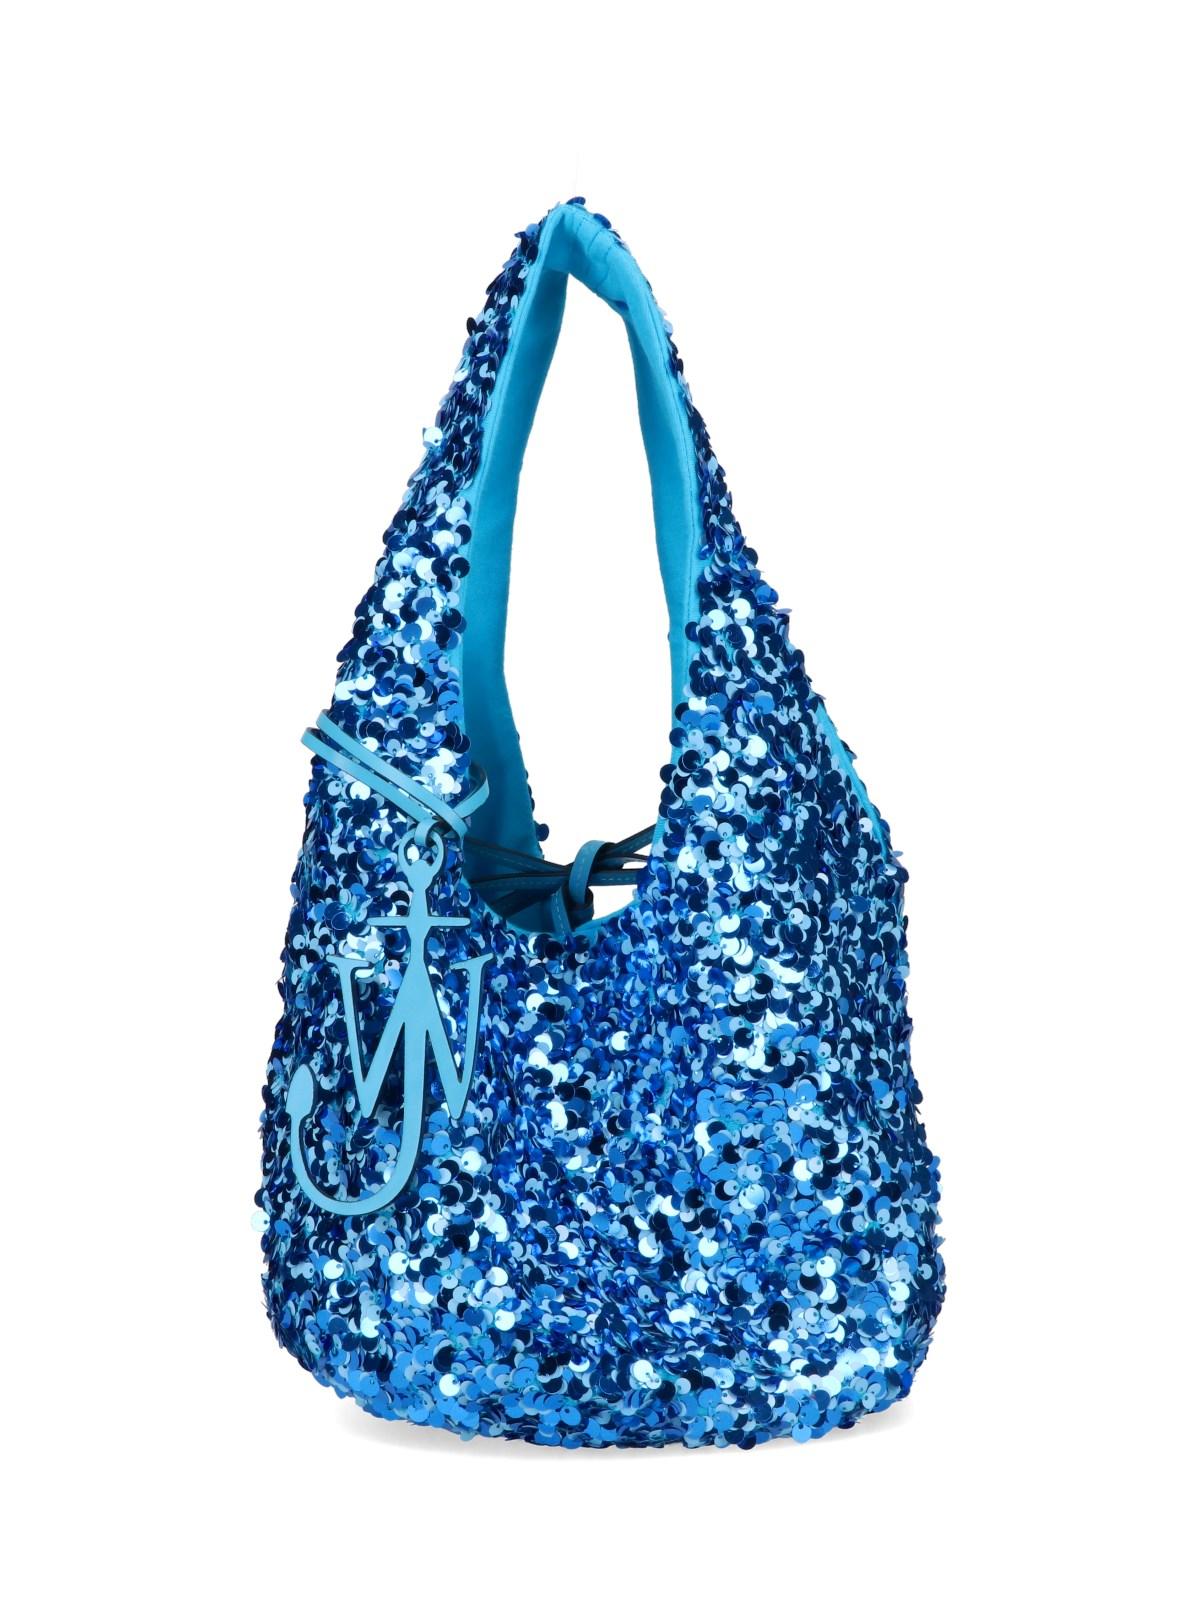 JW Anderson Sequin Bucket Bag in Blue | Lyst